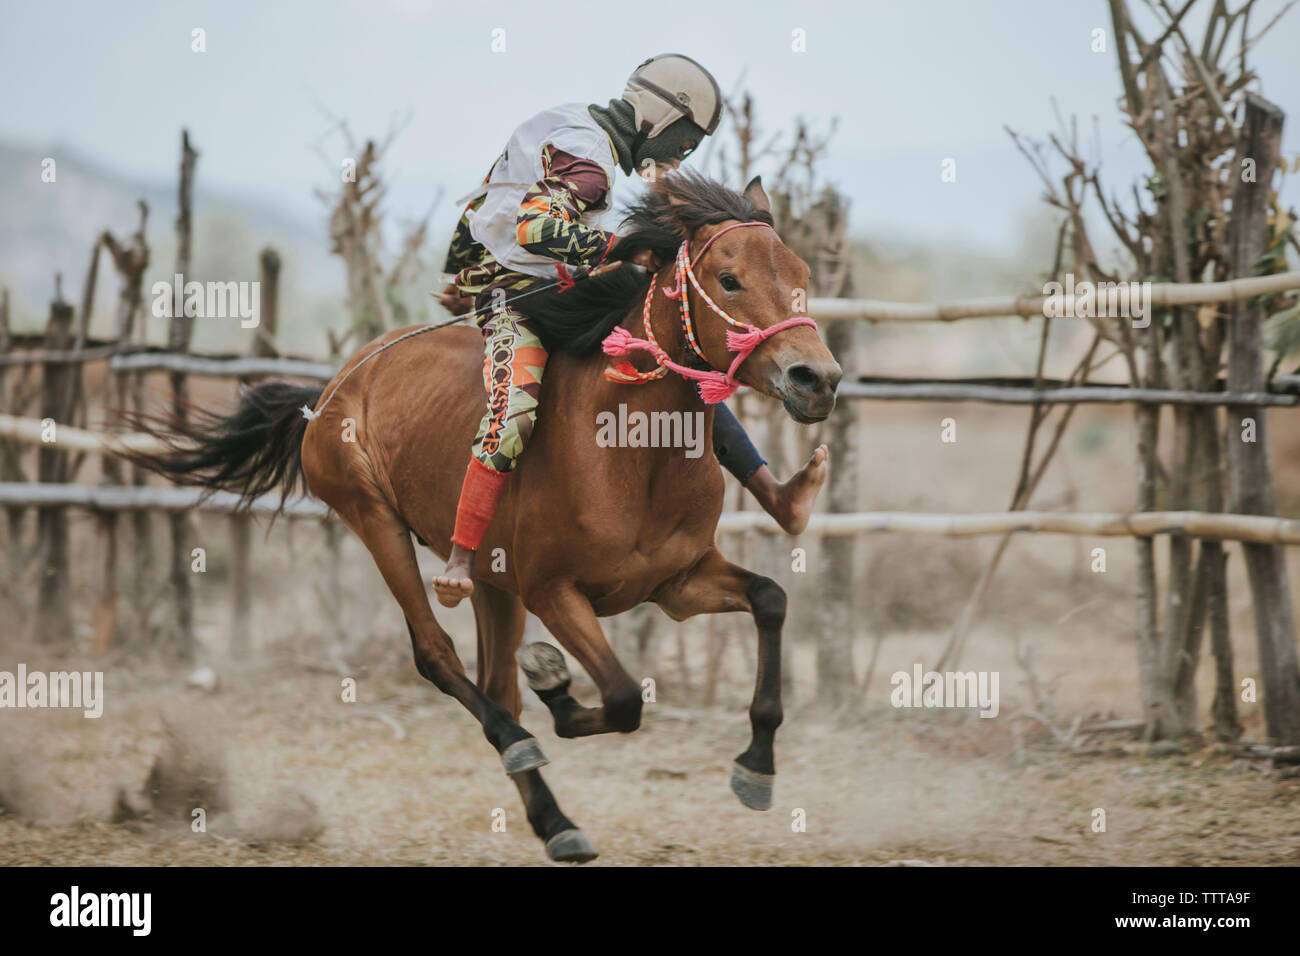 Jockey riding racehorse during horse racing Stock Photo